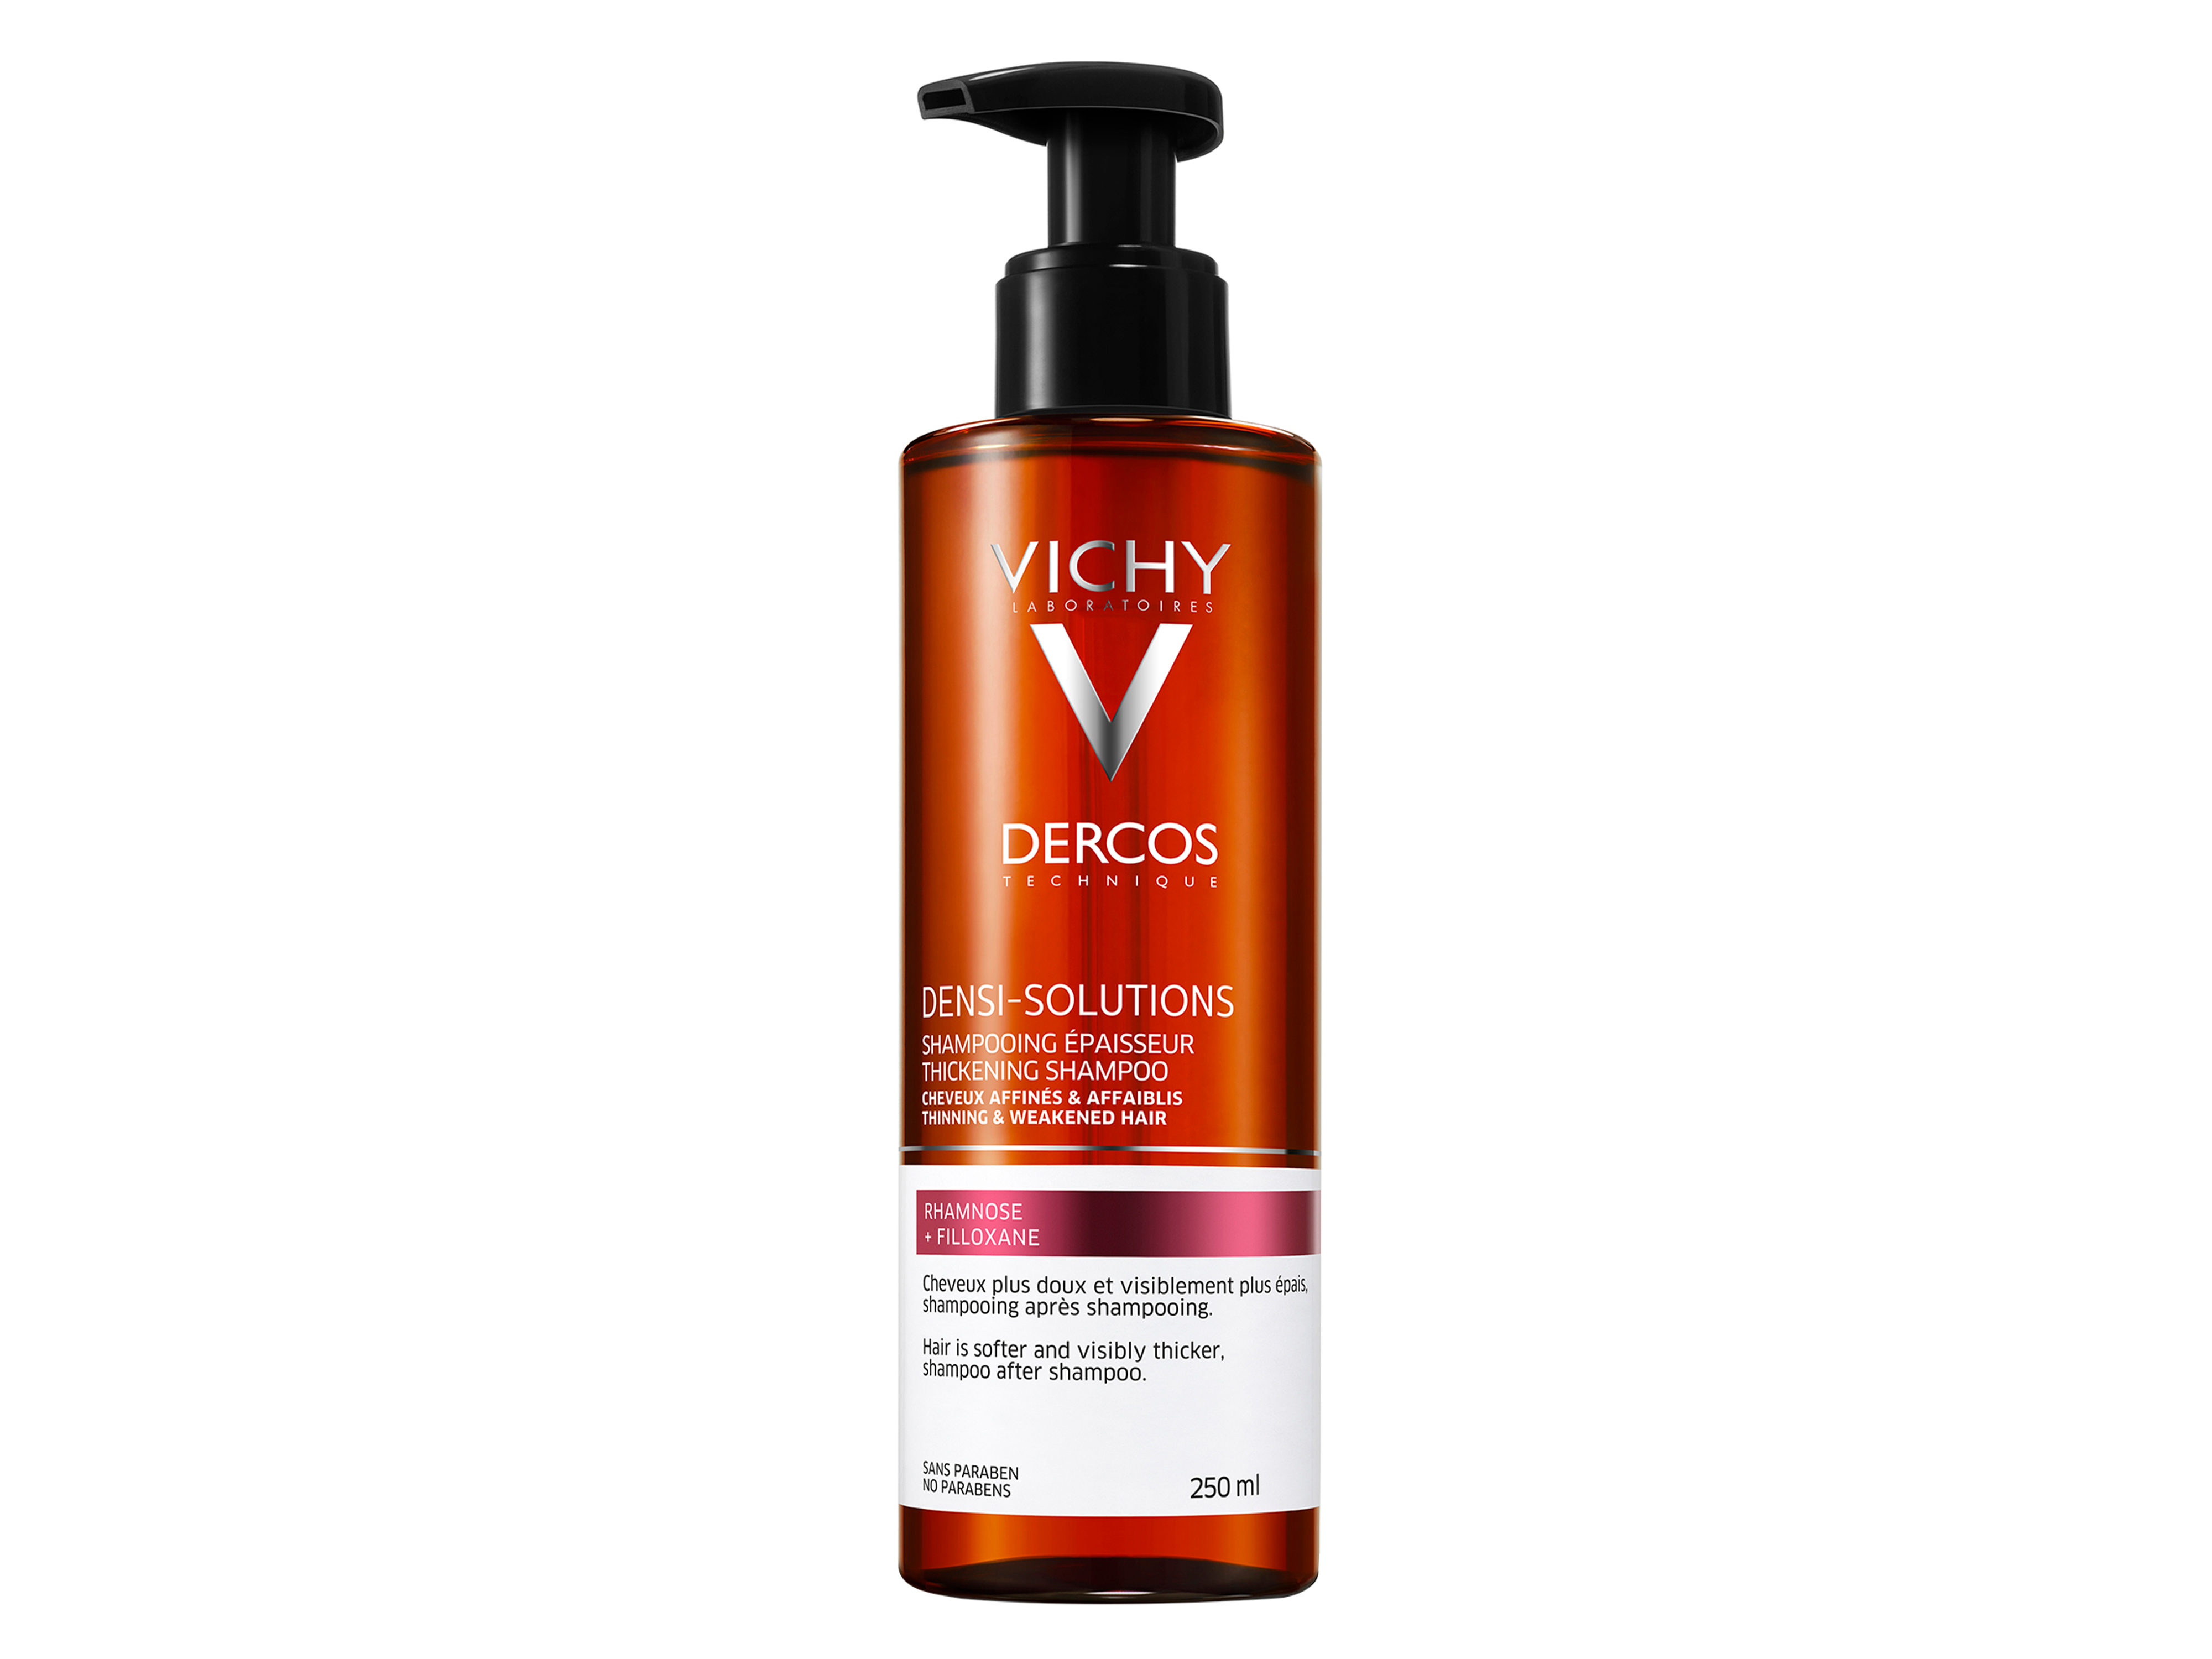 Vichy Dercos Densi-Solution Thickening Shampoo, 250 ml